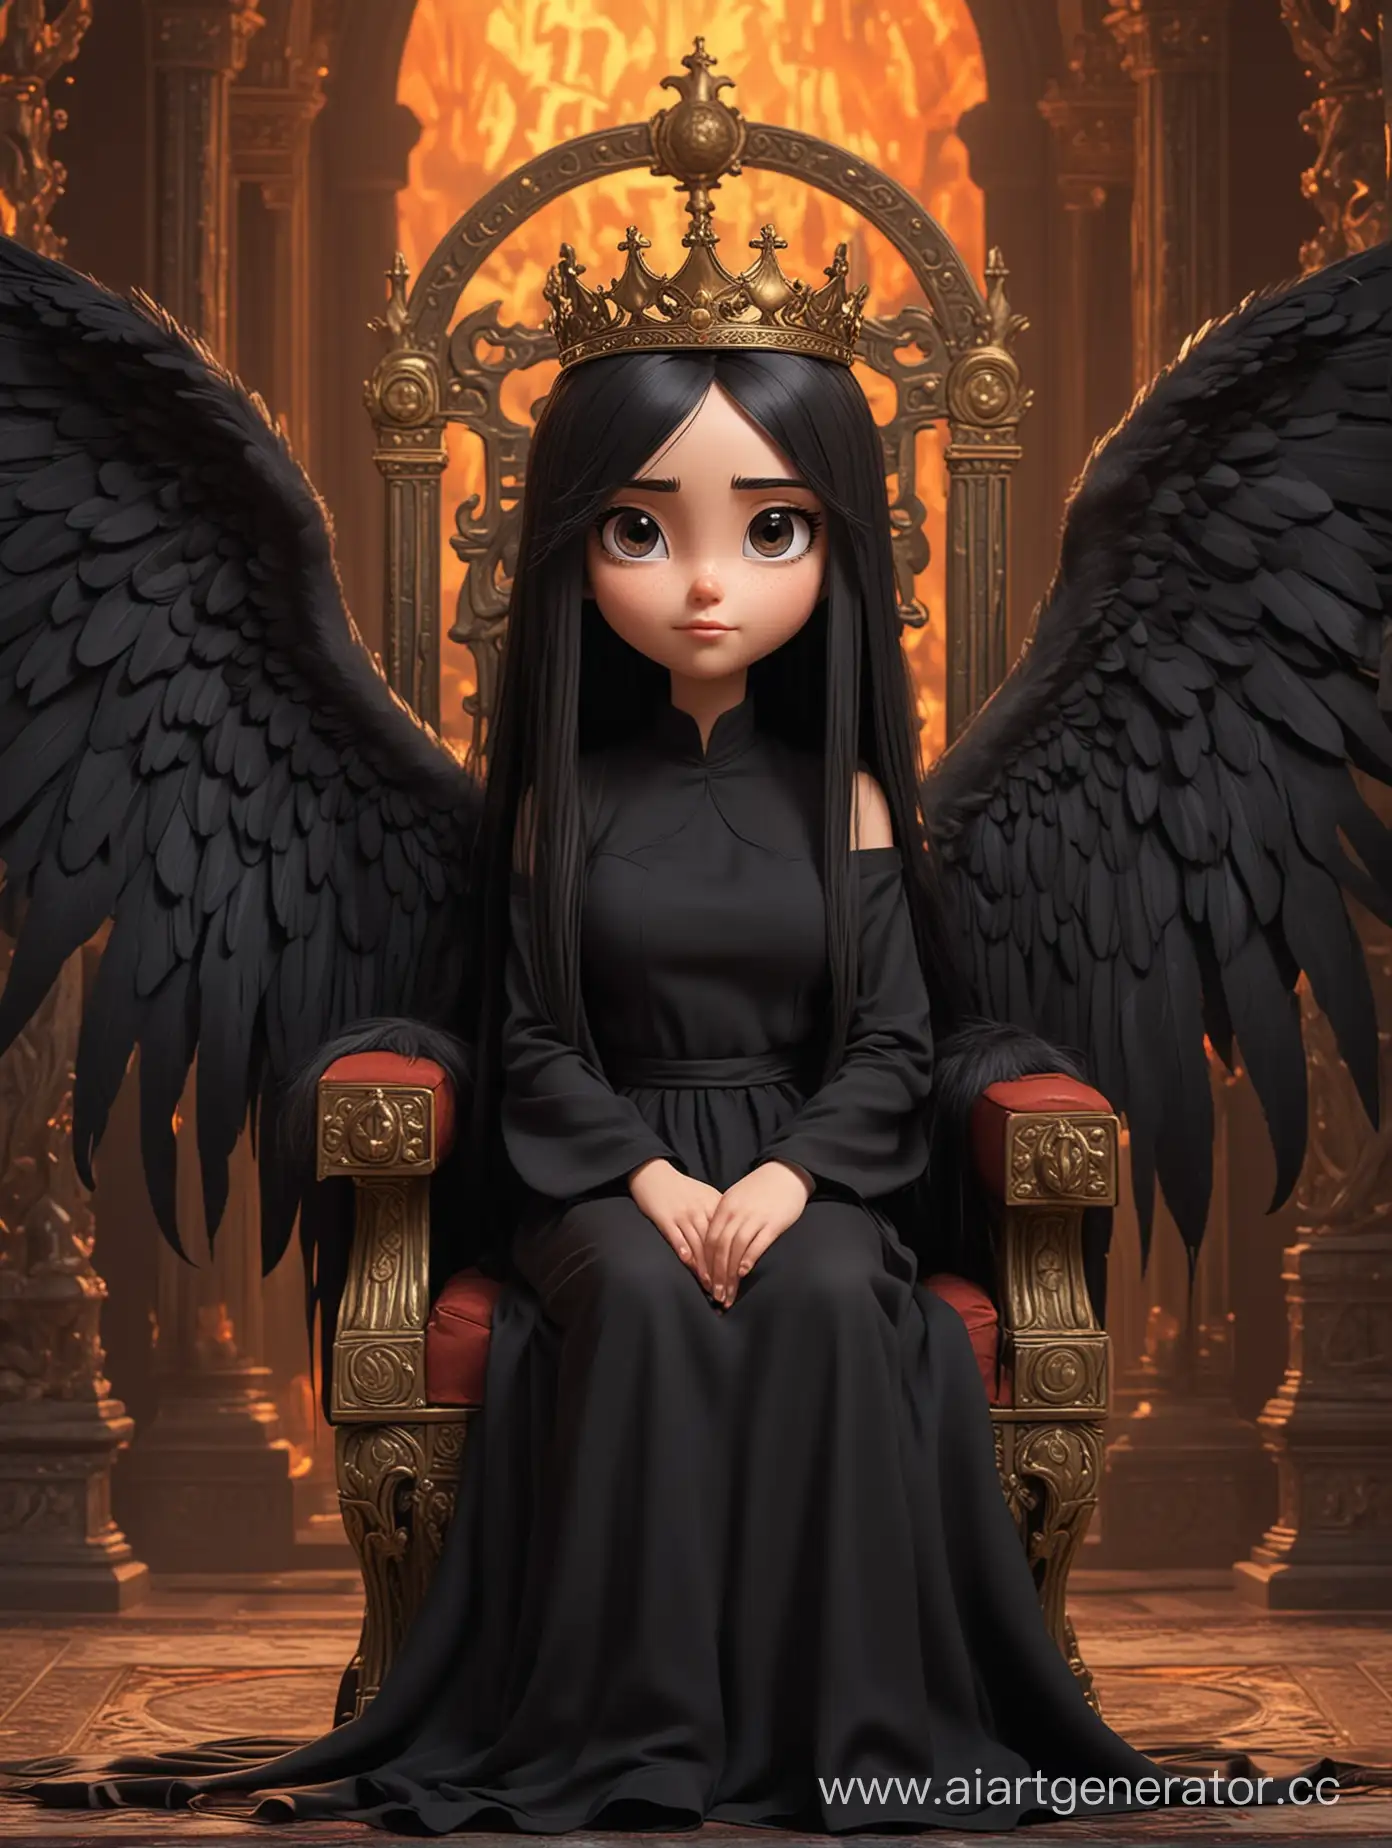 Dark-Winged-Cartoon-Girl-Sitting-on-Throne-in-Hell